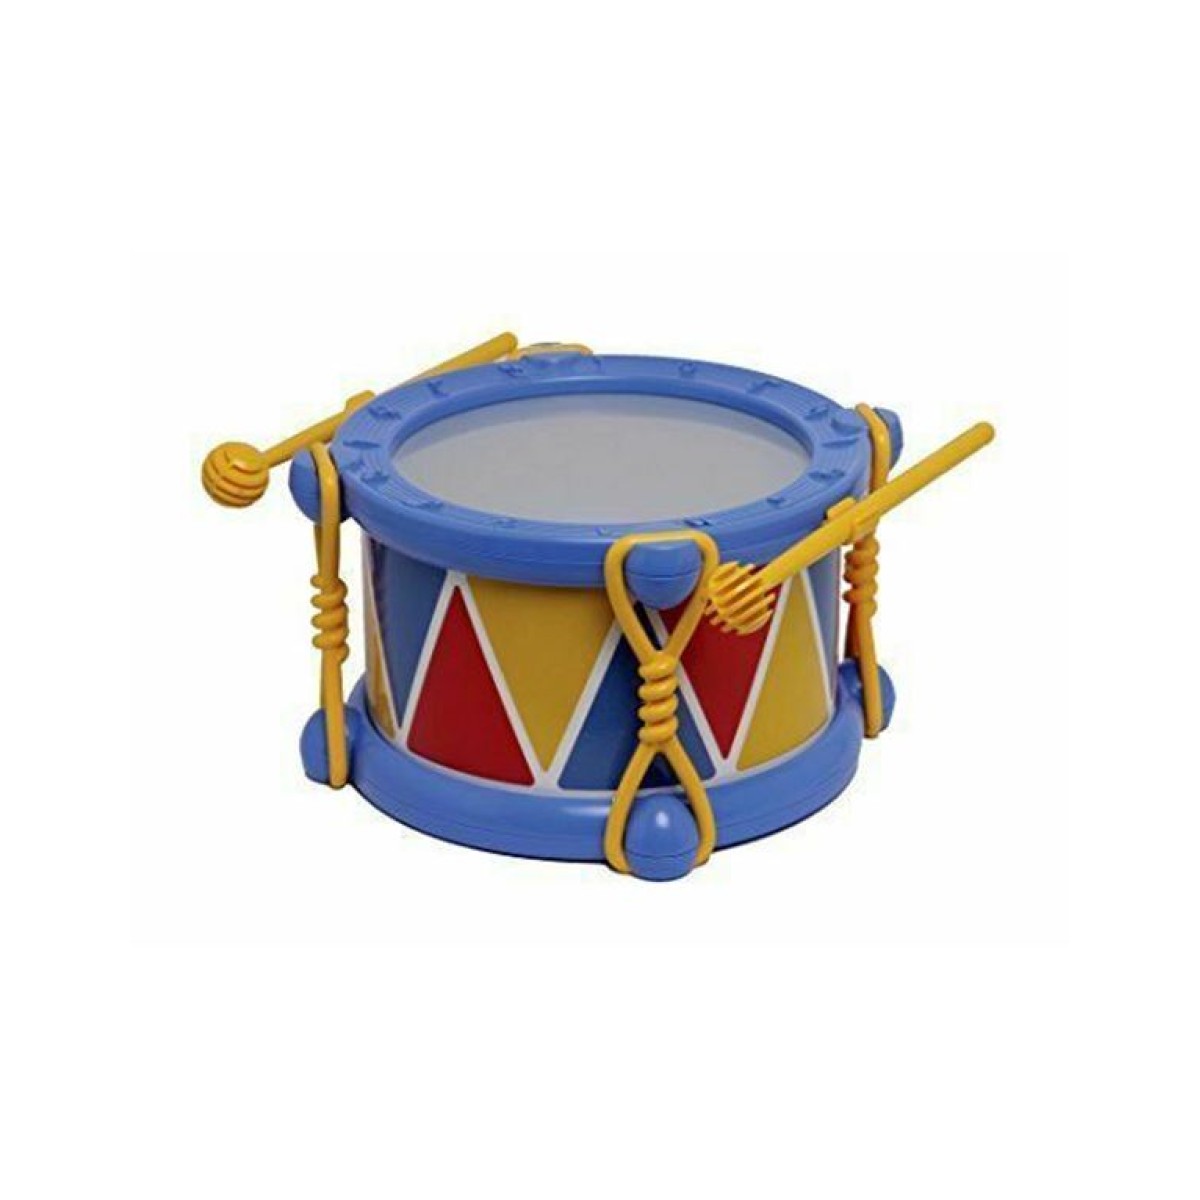 HALILIT MD807ΕU Ταμπούρο με μπαγκέτες Baby Drum